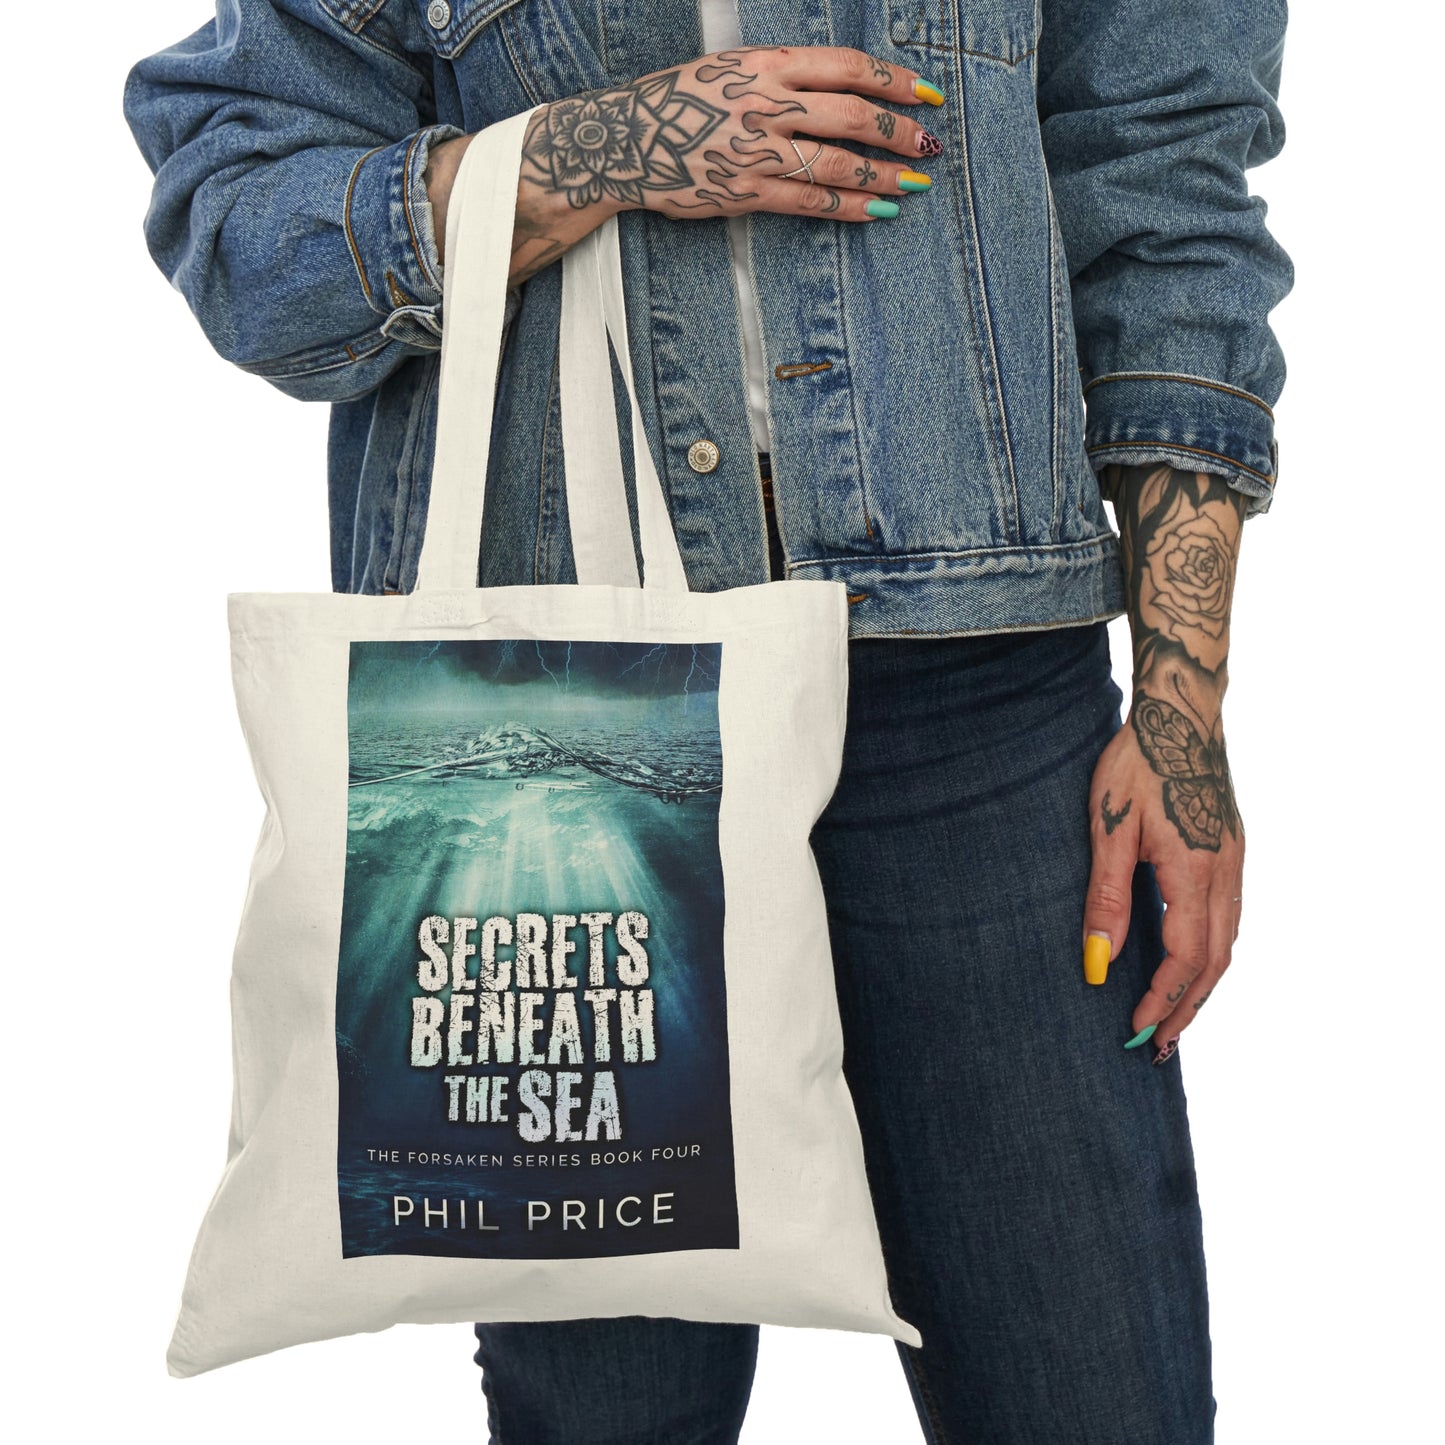 Secrets Beneath The Sea - Natural Tote Bag